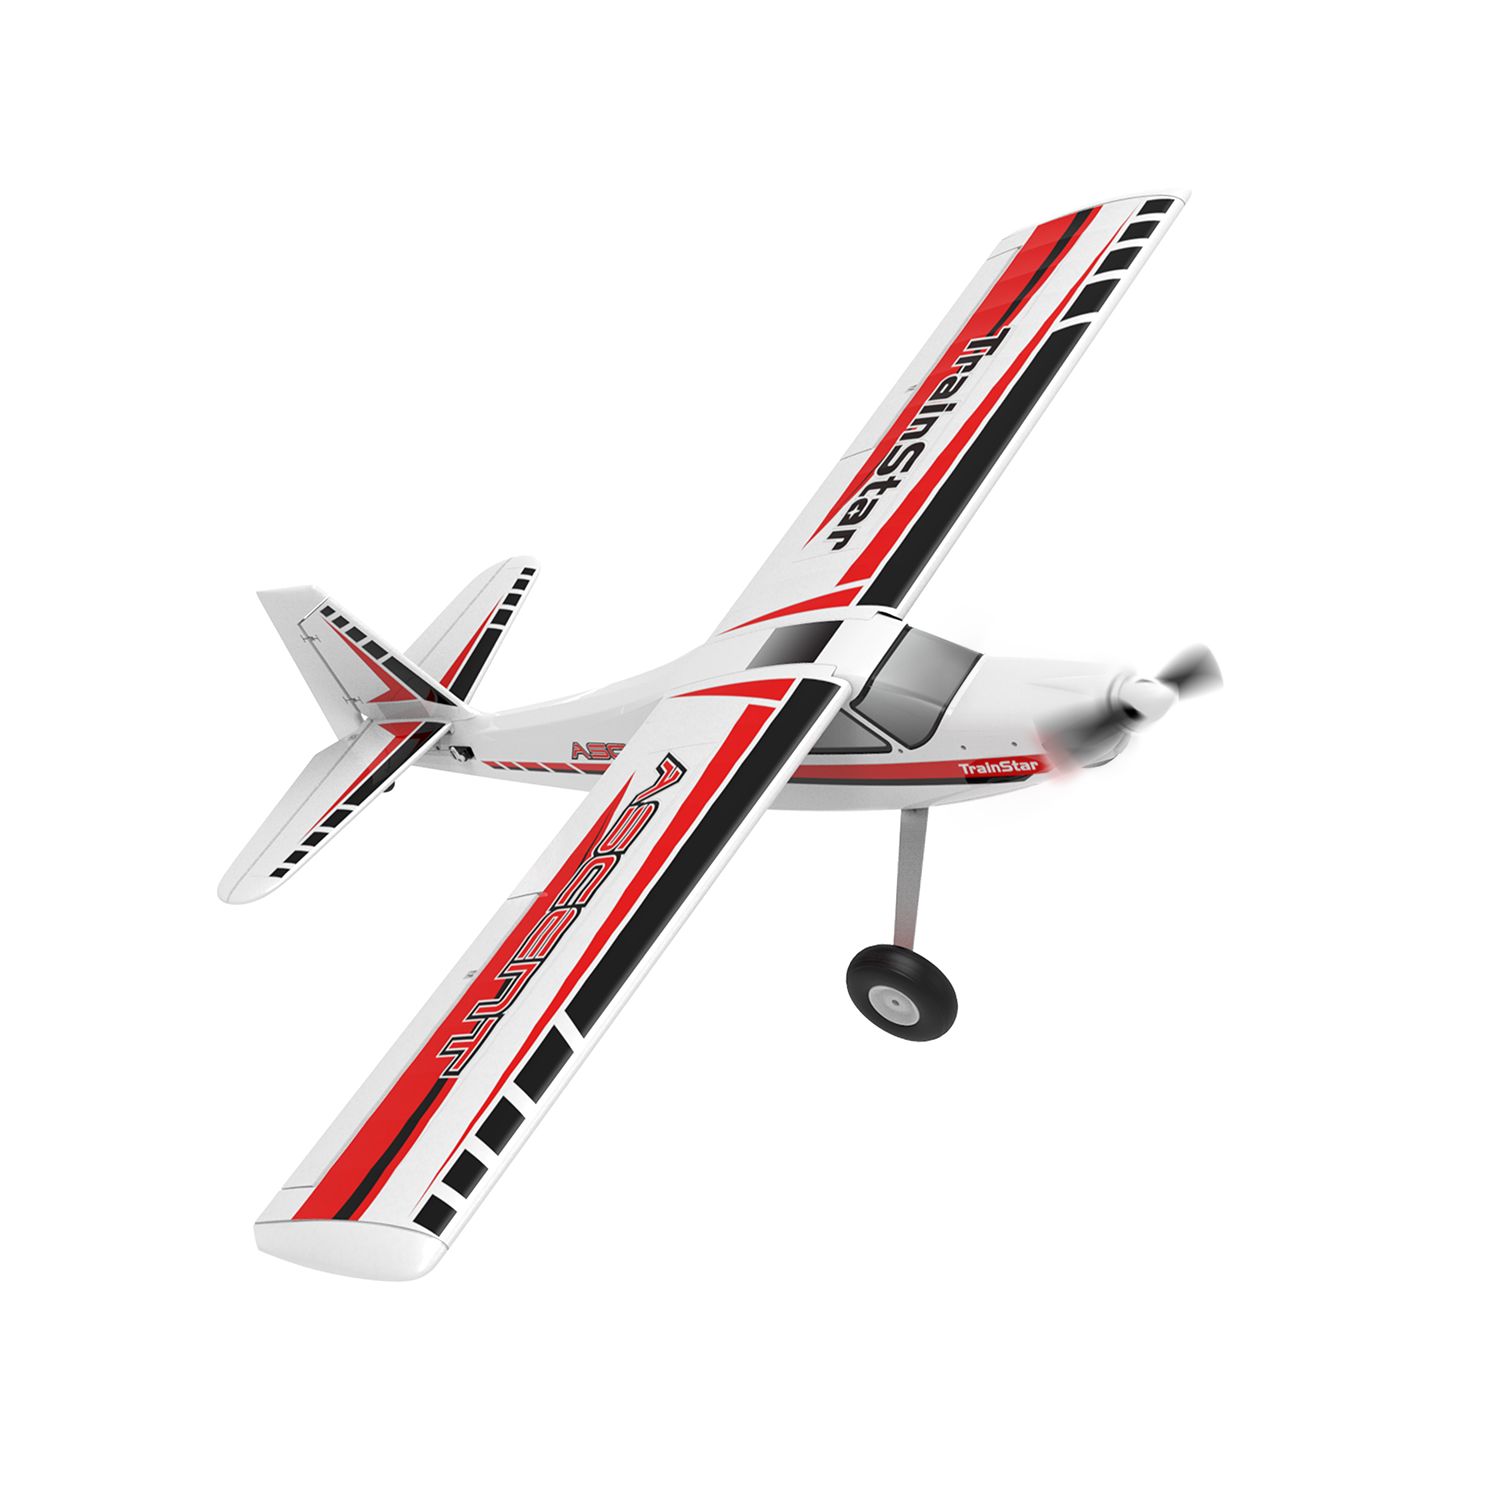 Volantex TrainStar Ascent 747-8 1400mm Wingspan EPO Trainer Aircraft RC Airplane PNP